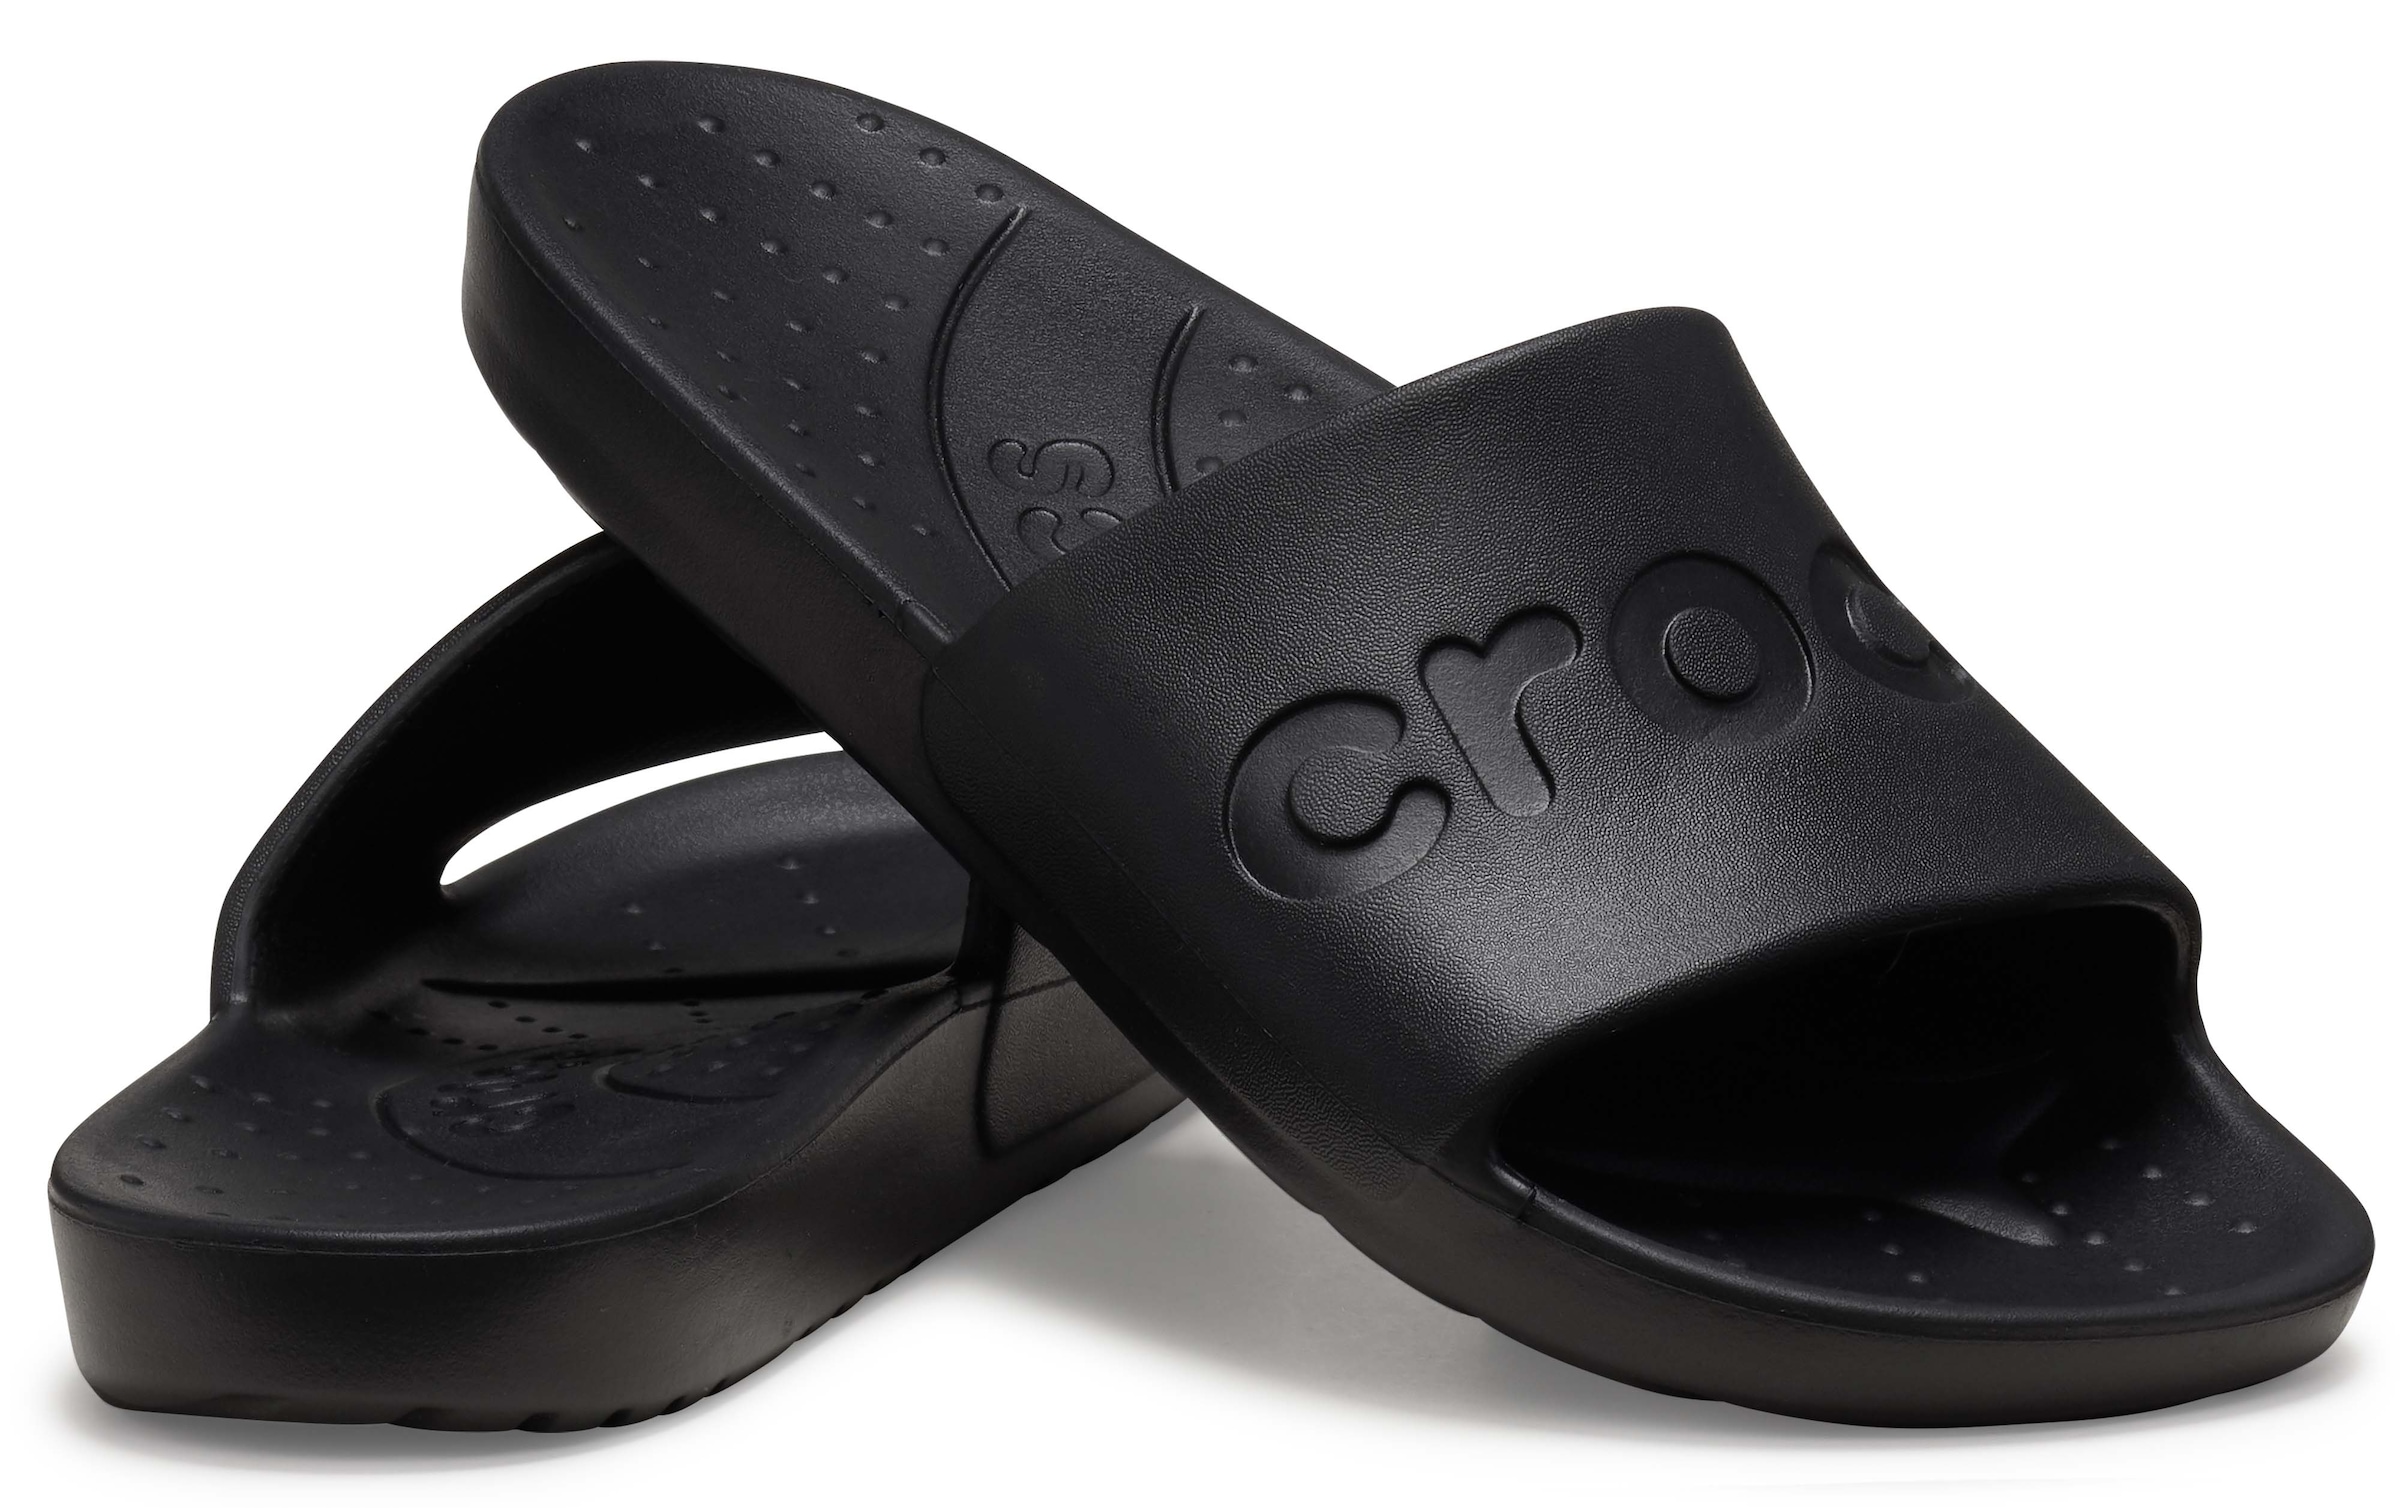 Crocs Pantolette "Crocs Slide", Badeschuh, Schlappen, Strandschuh mit bequemem Fußbett